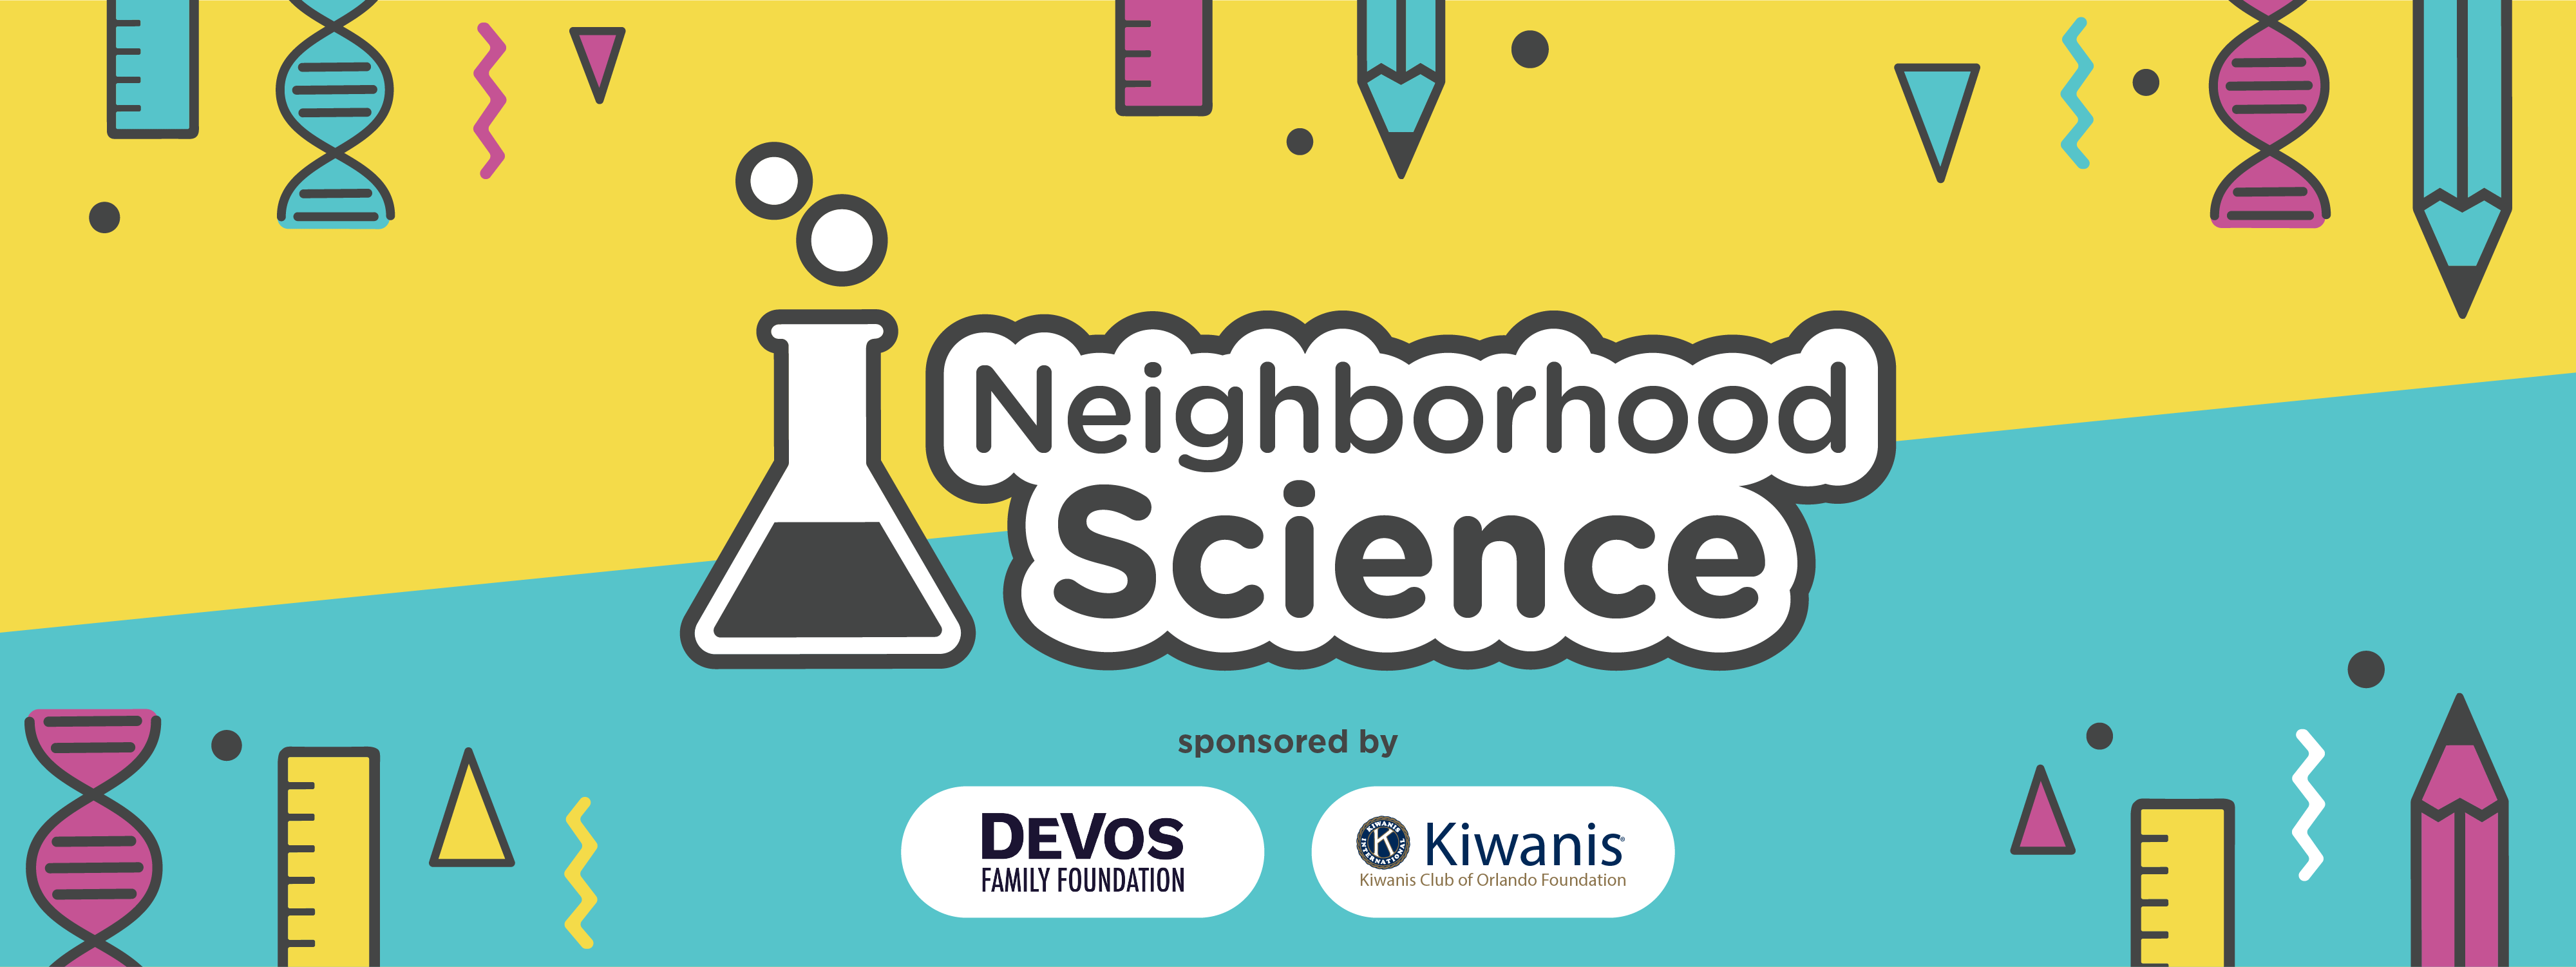 Neighborhood Science - sponsored by Kiwanis and DeVos Family Foundation